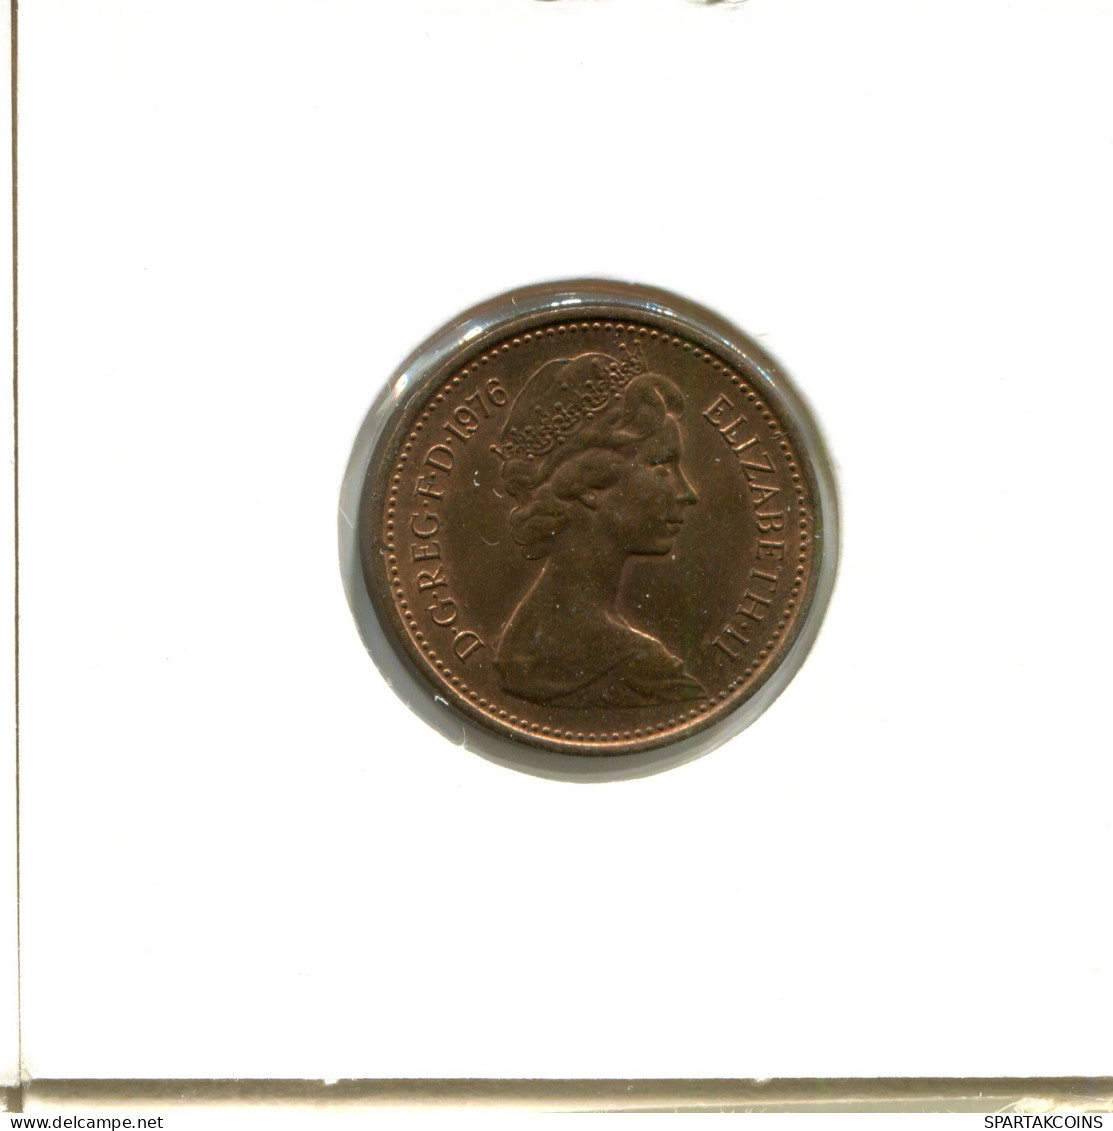 NEW PENNY 1976 UK GRANDE-BRETAGNE GREAT BRITAIN Pièce #AX685.F.A - 1 Penny & 1 New Penny